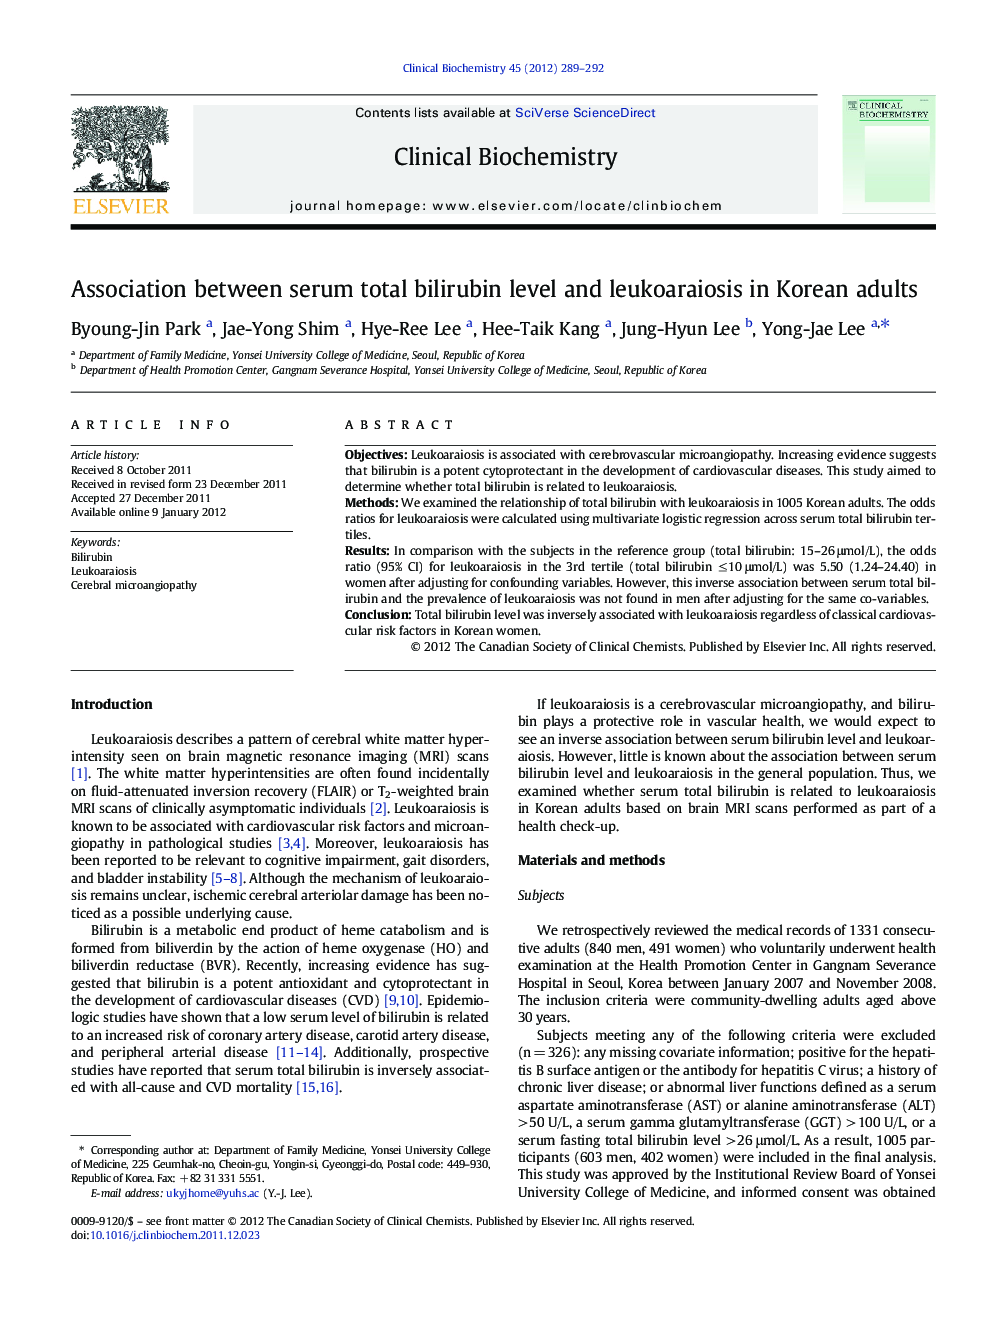 Association between serum total bilirubin level and leukoaraiosis in Korean adults